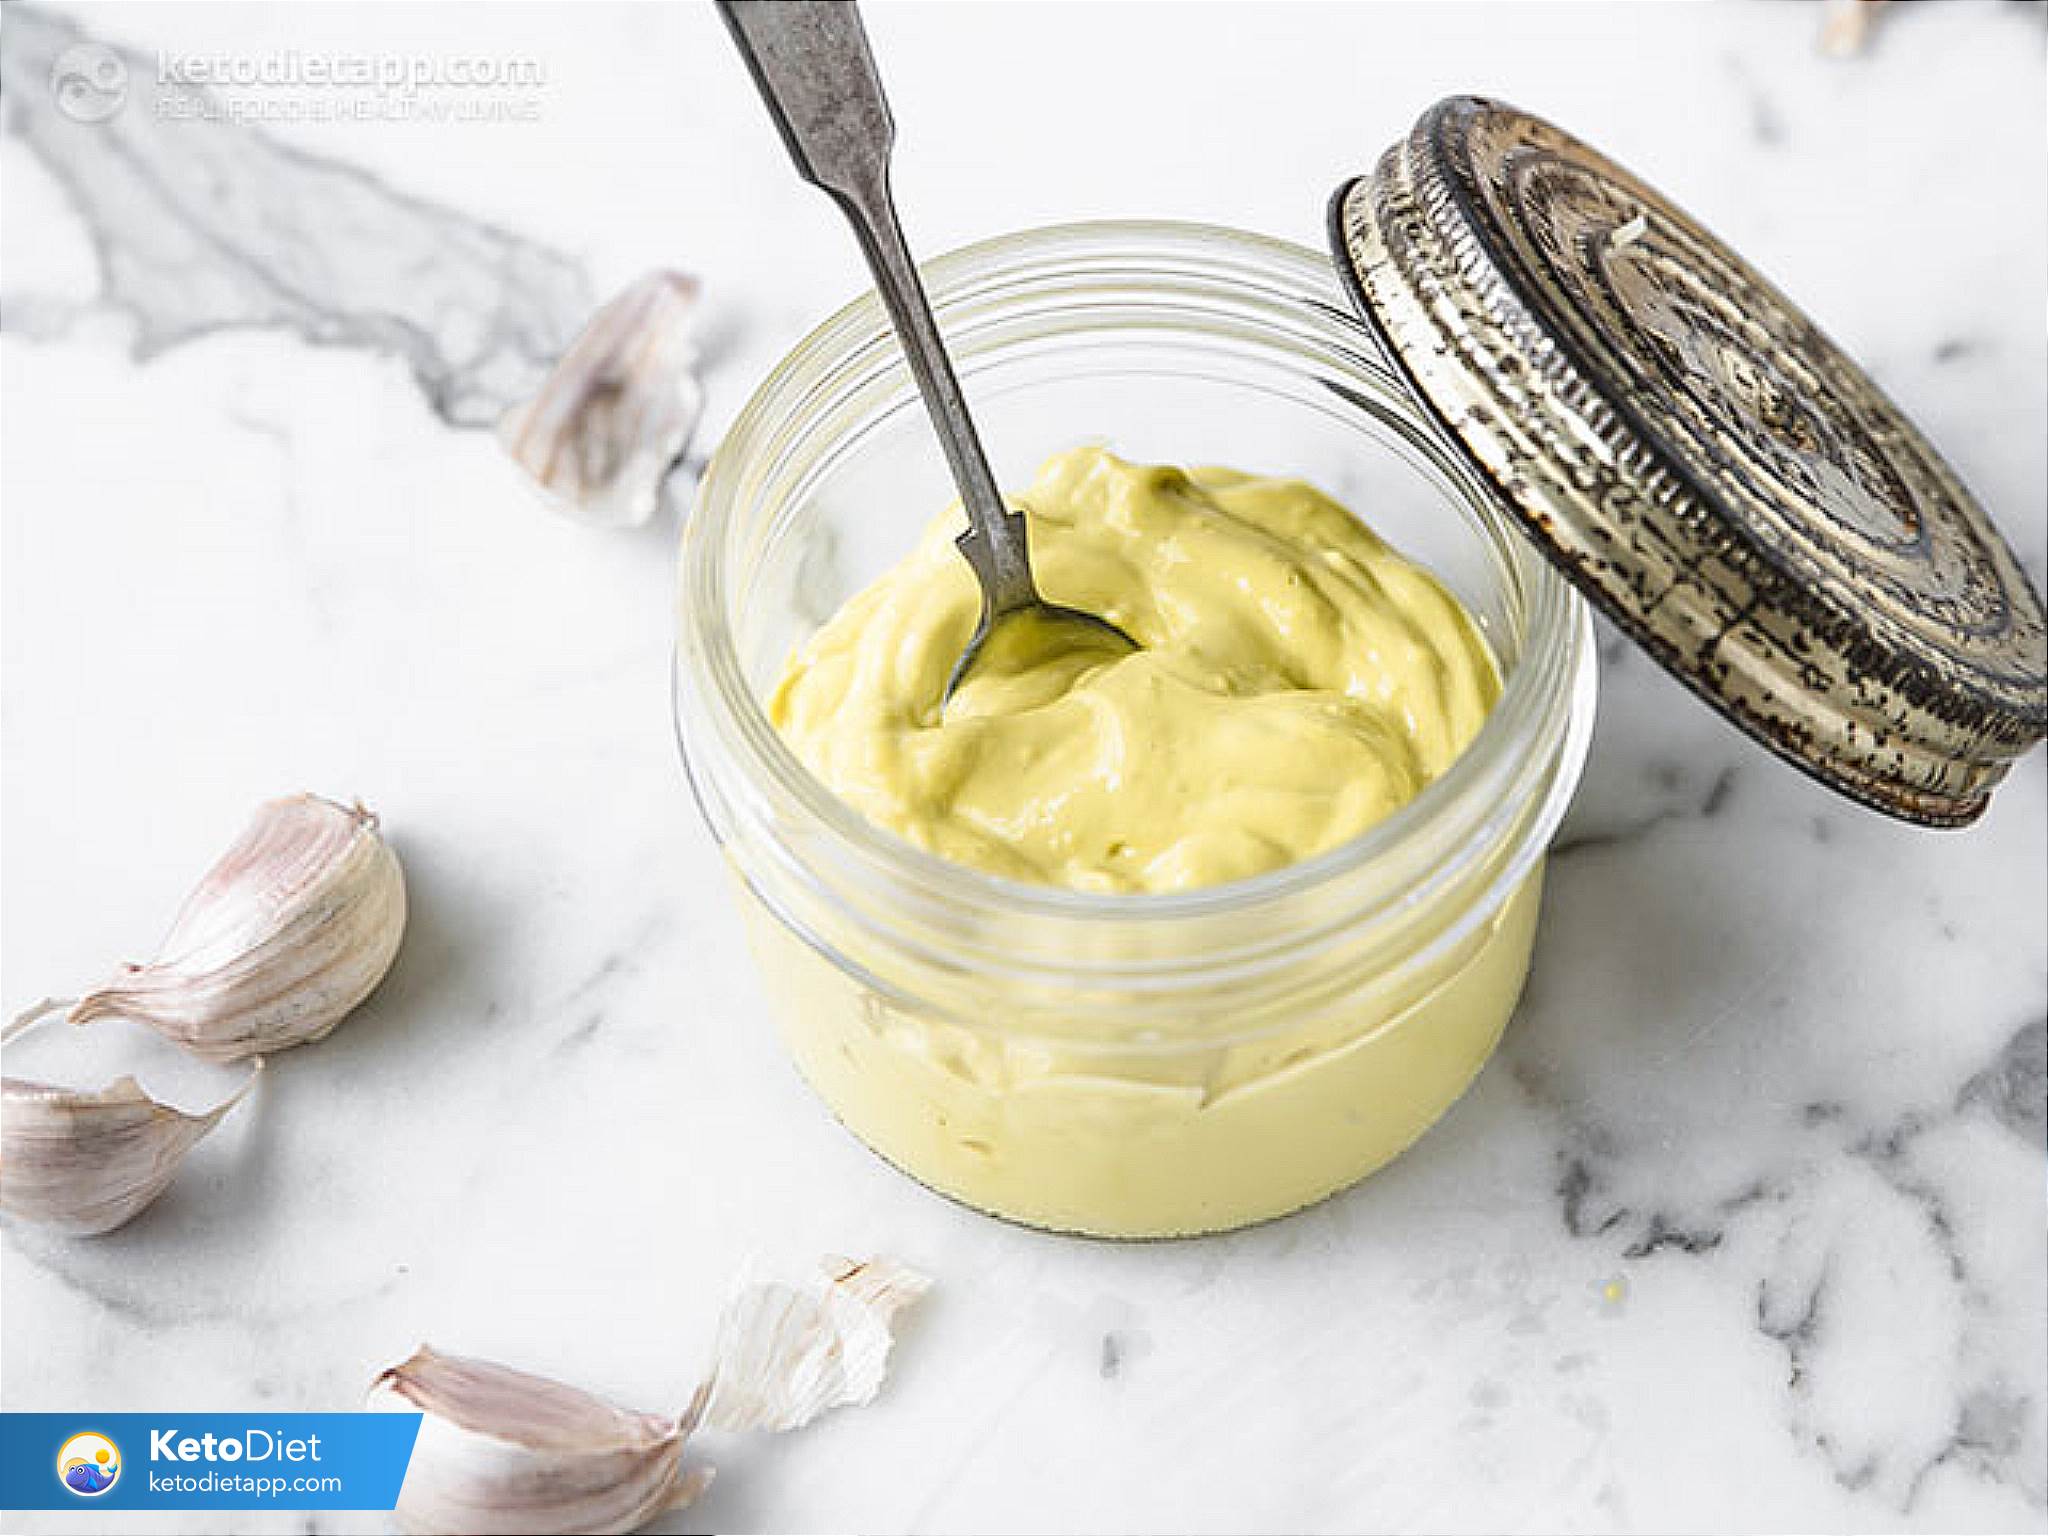 https://ketodietapp.com/Blog/lchf-soc/quick-blender-garlic-mayonnaise-1C5E3A34.jpg